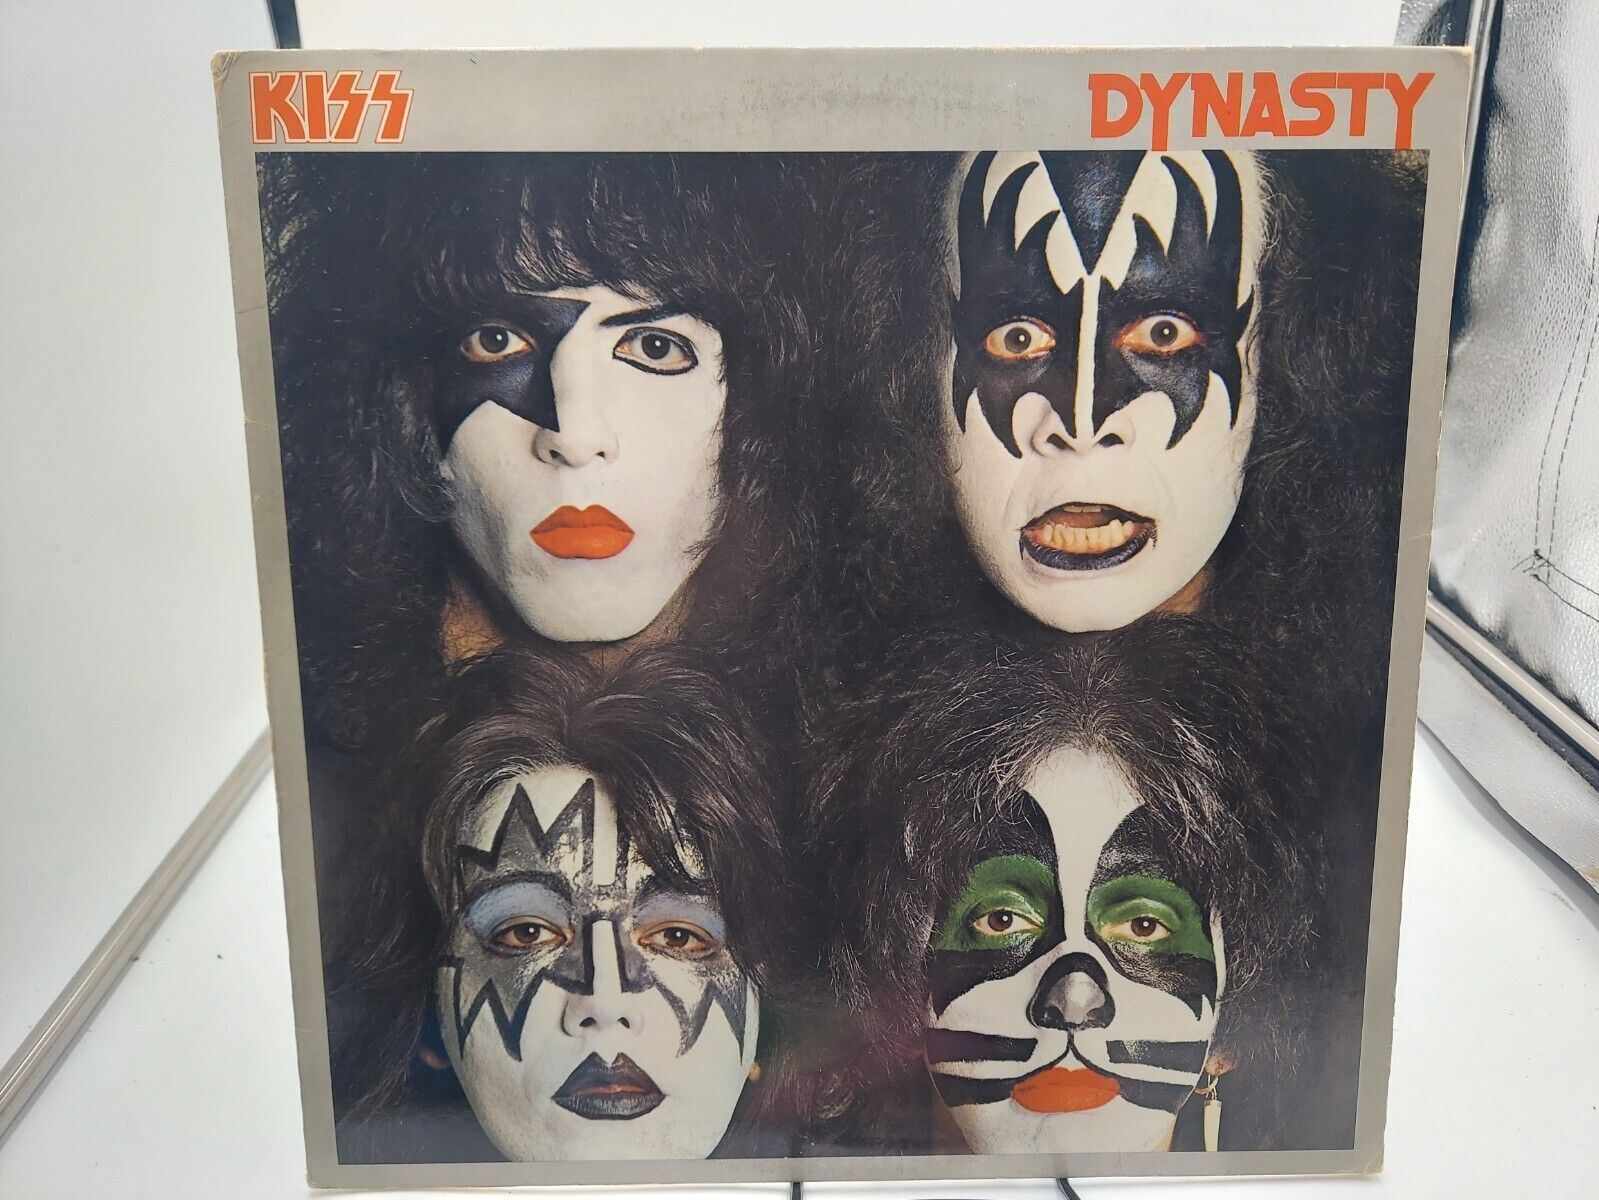 KISS DYNASTY LP Record 1979 NBLP 7152 Insert Sterling Ultrasonic Clean VG+